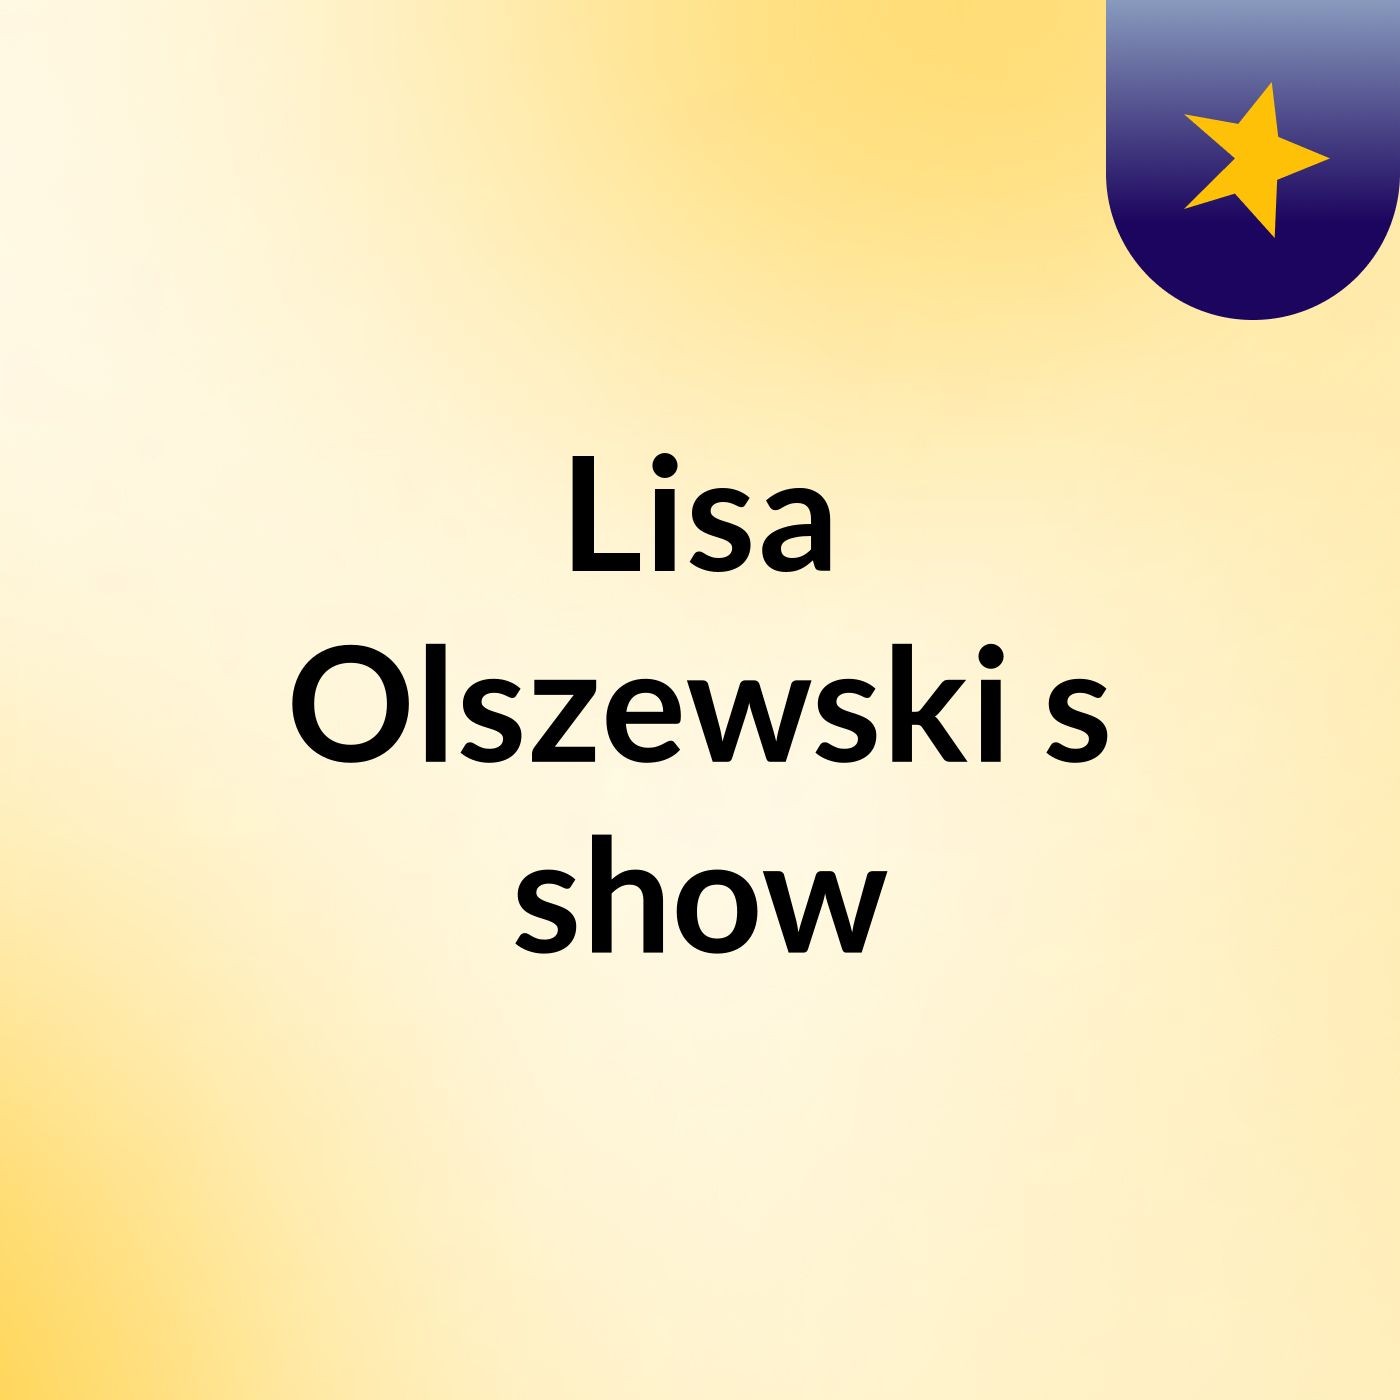 Lisa Olszewski's show